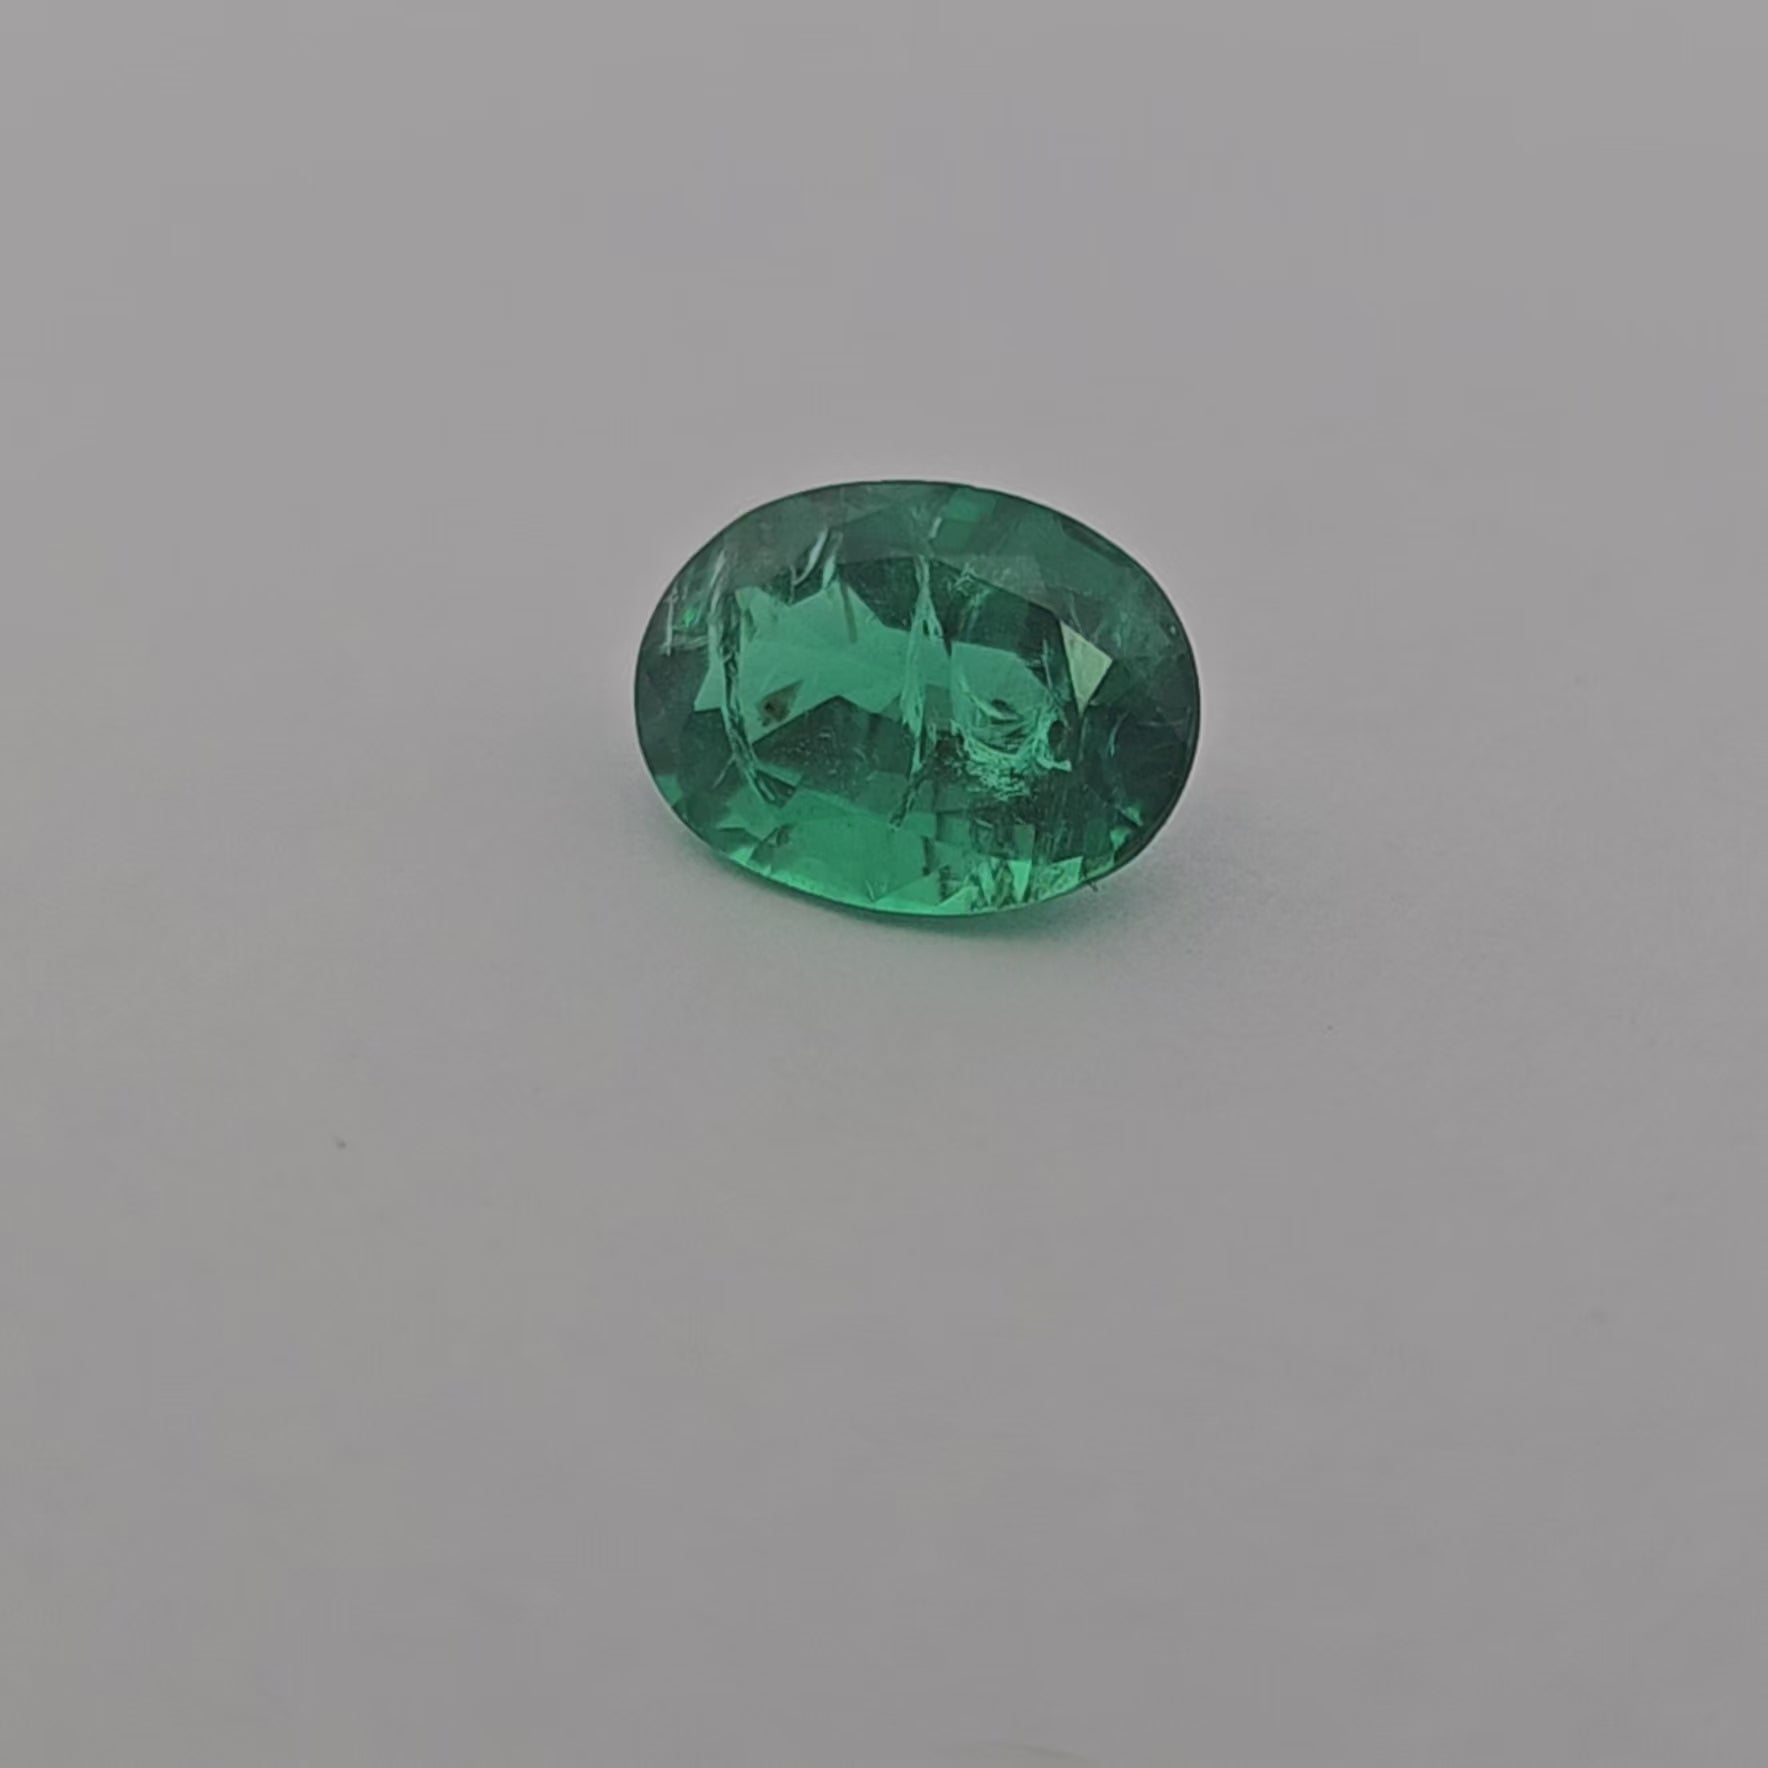 loose Natural Zambian Emerald Stone 1.66 Carats Oval Cut 9.2 x 7 mm